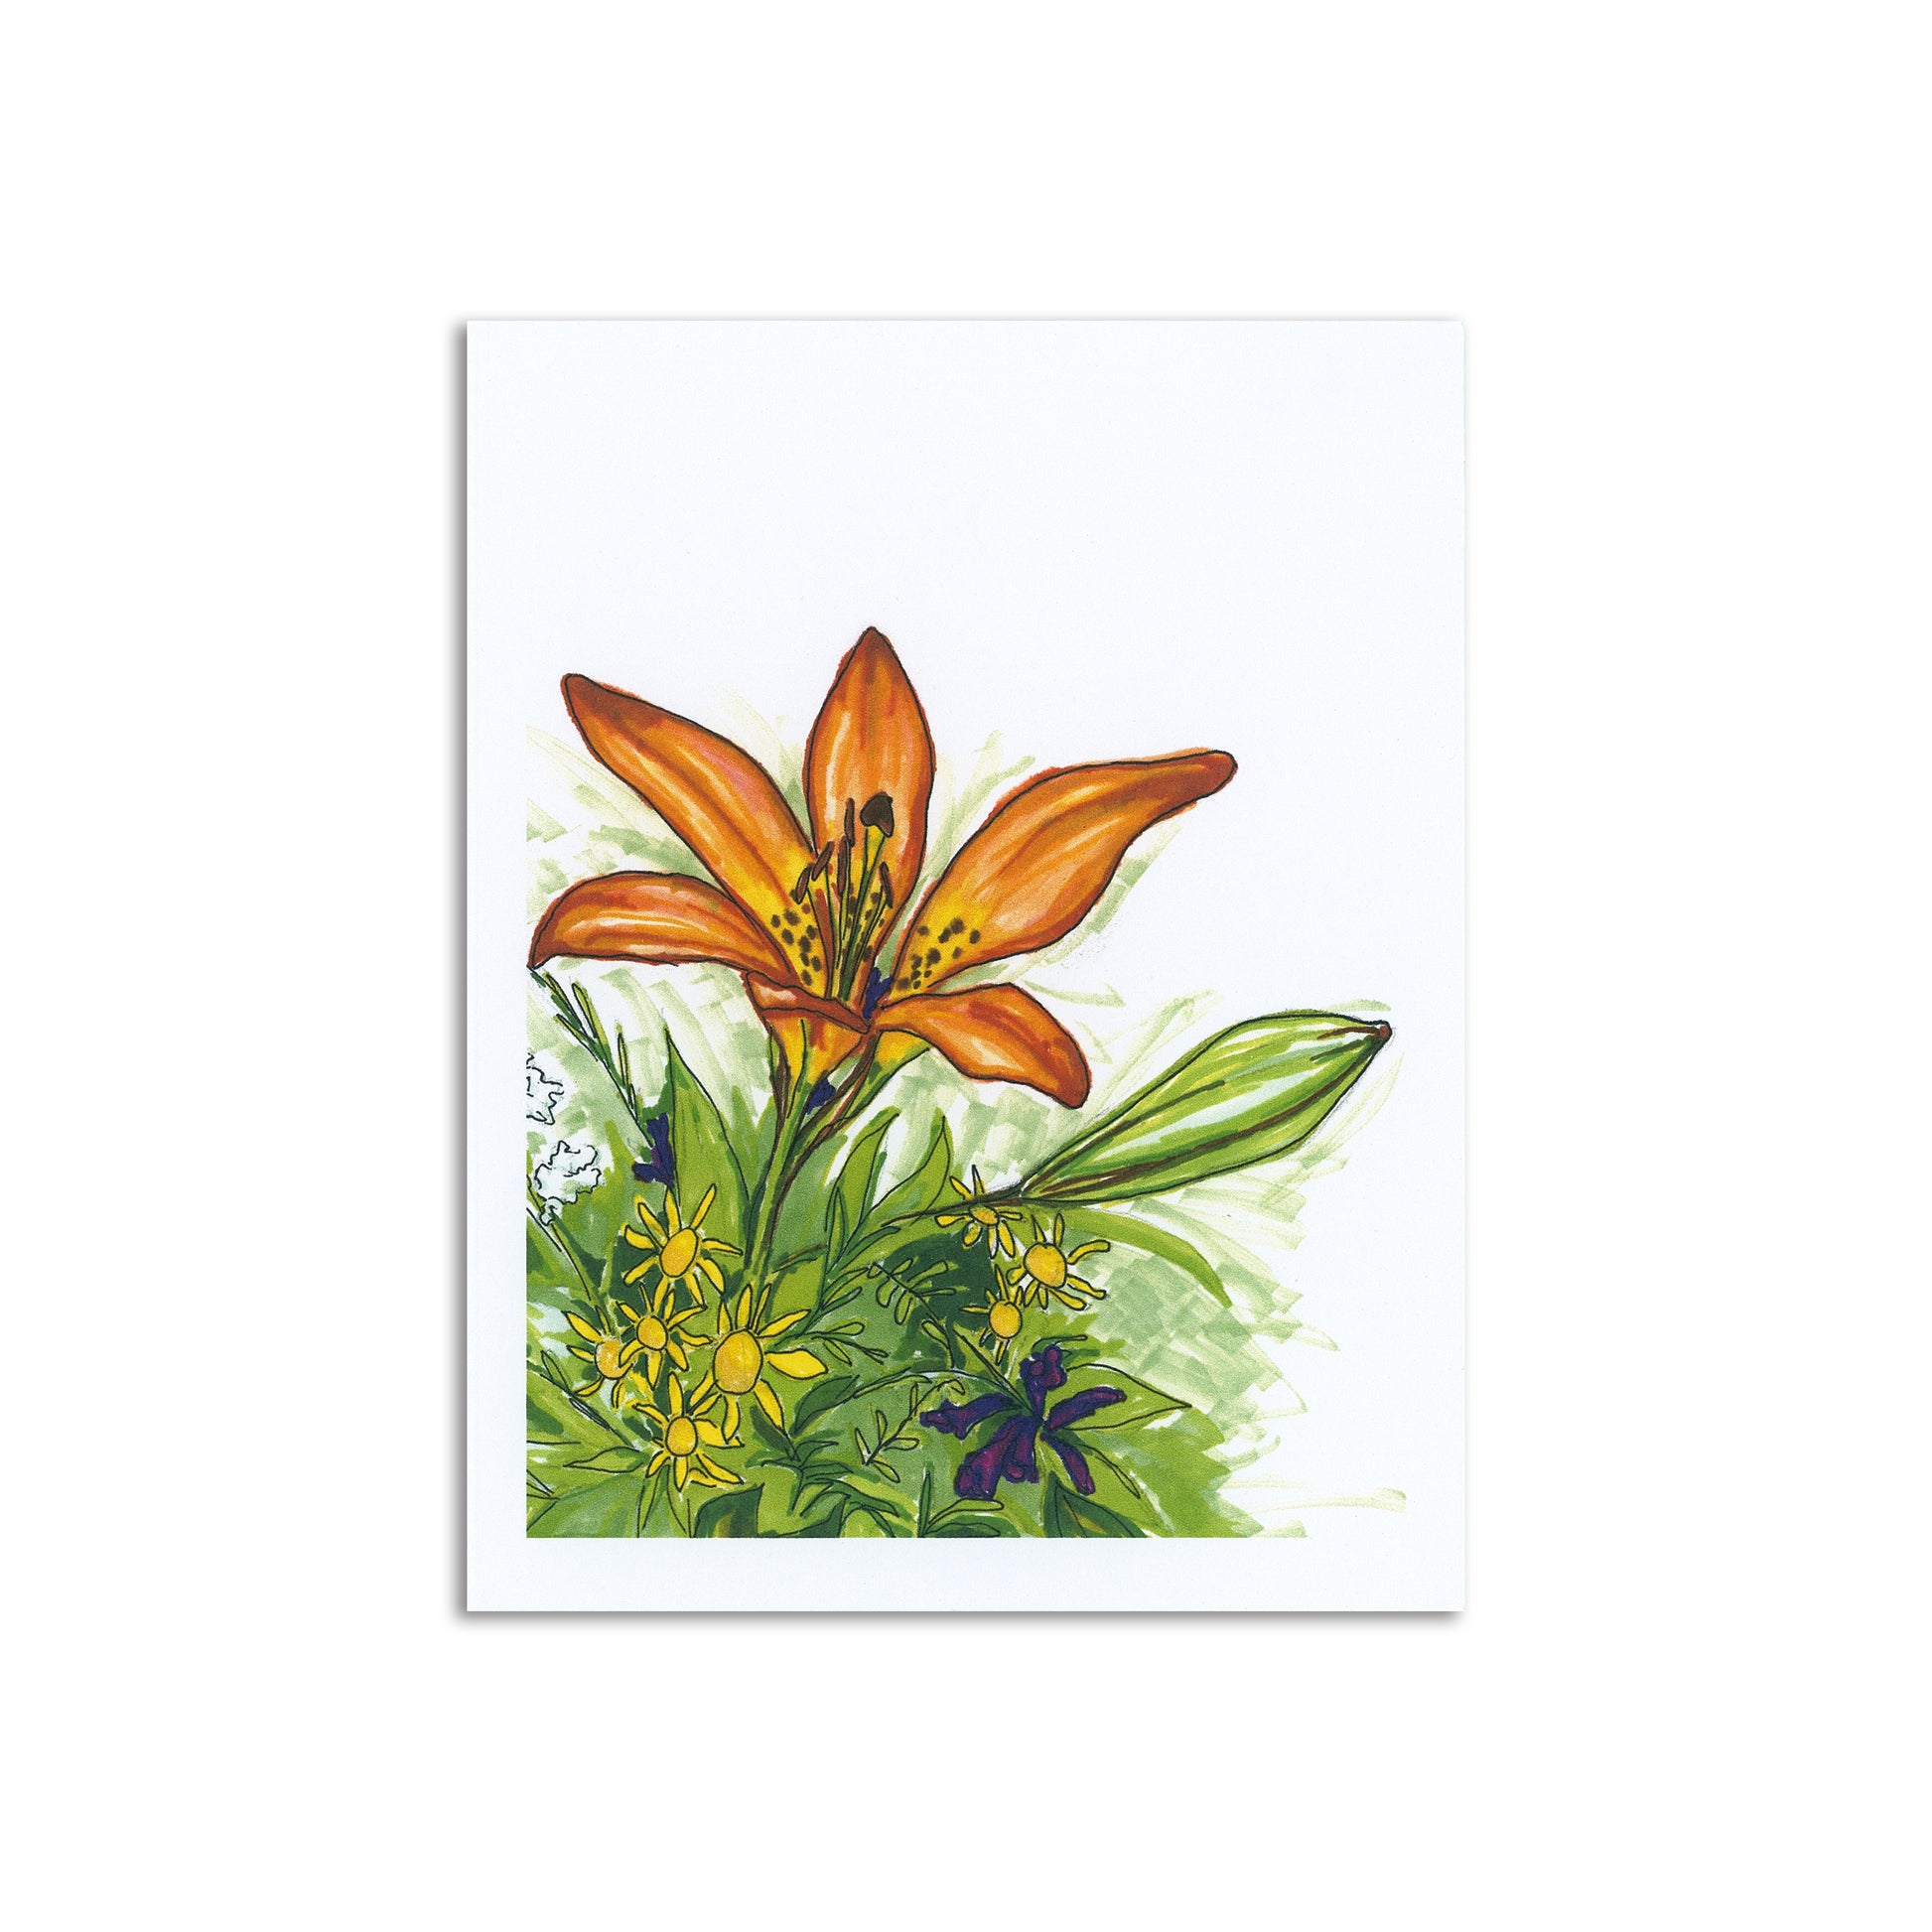 Woodland Wildflower x Sapphorica Creations- Woodland Series II, 5 Art Card Box Set - Sapphorica Creations 